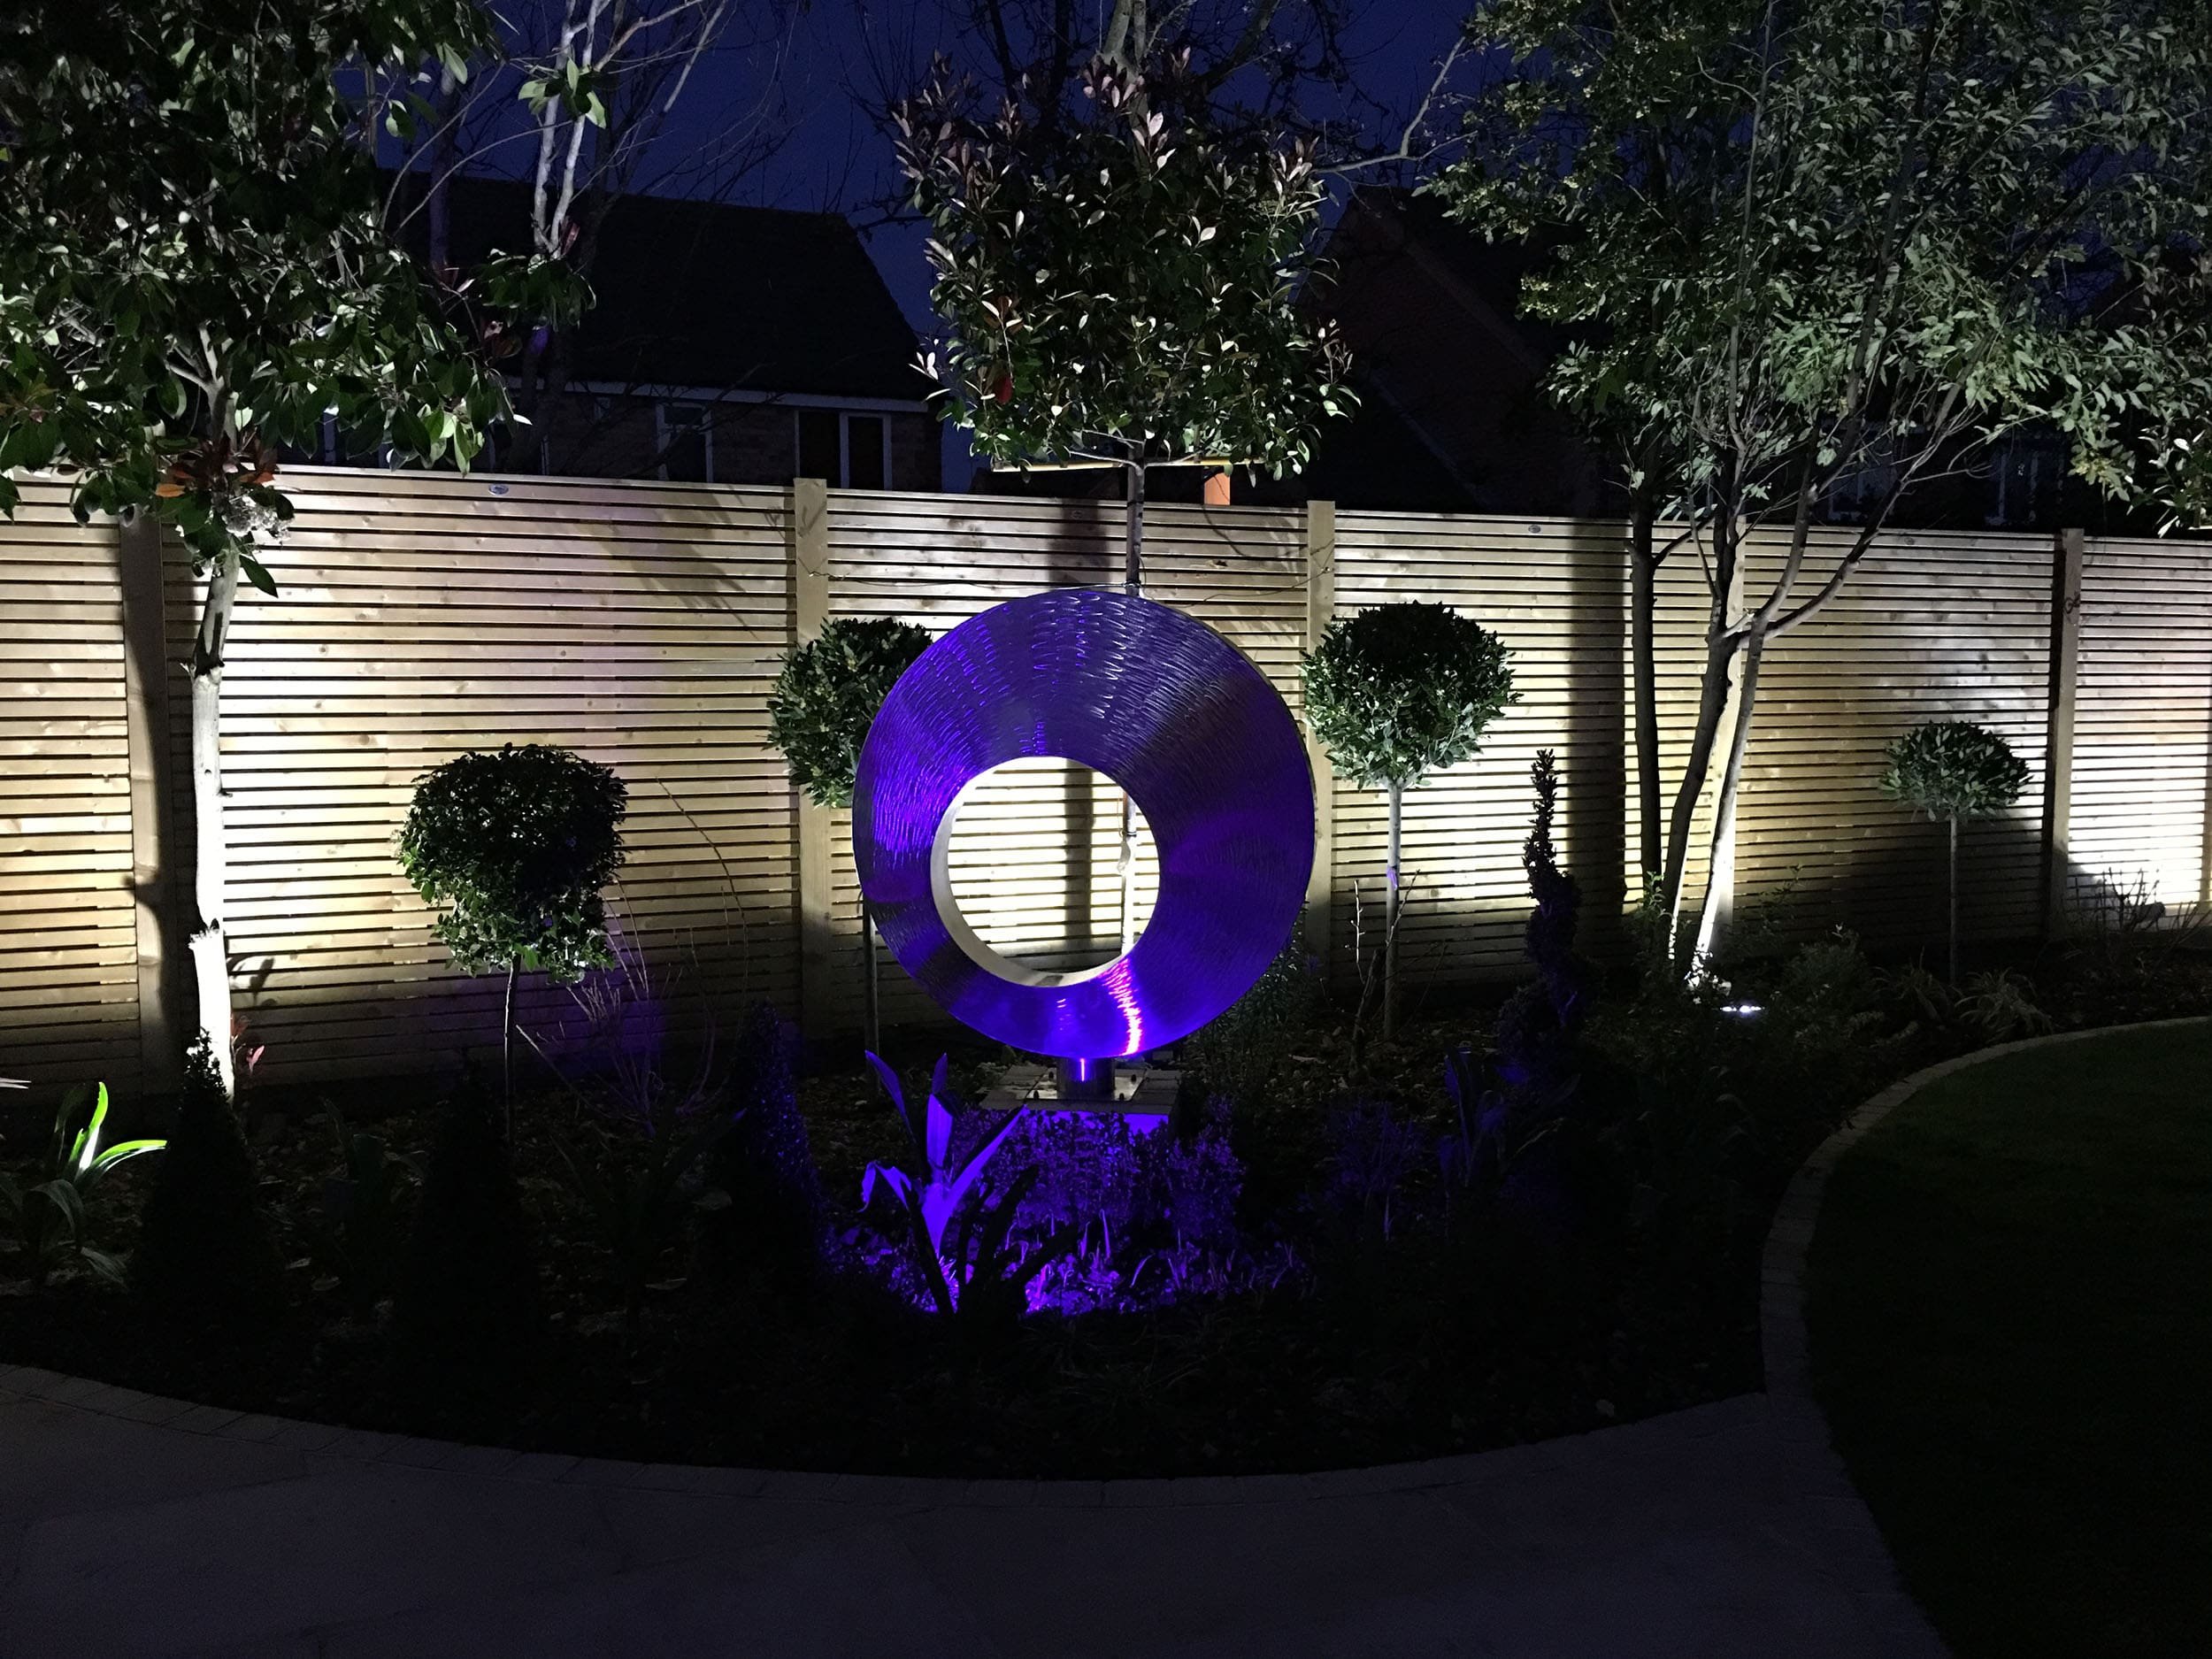 orbital-stainless-steel-garden-sculpture-night.jpg